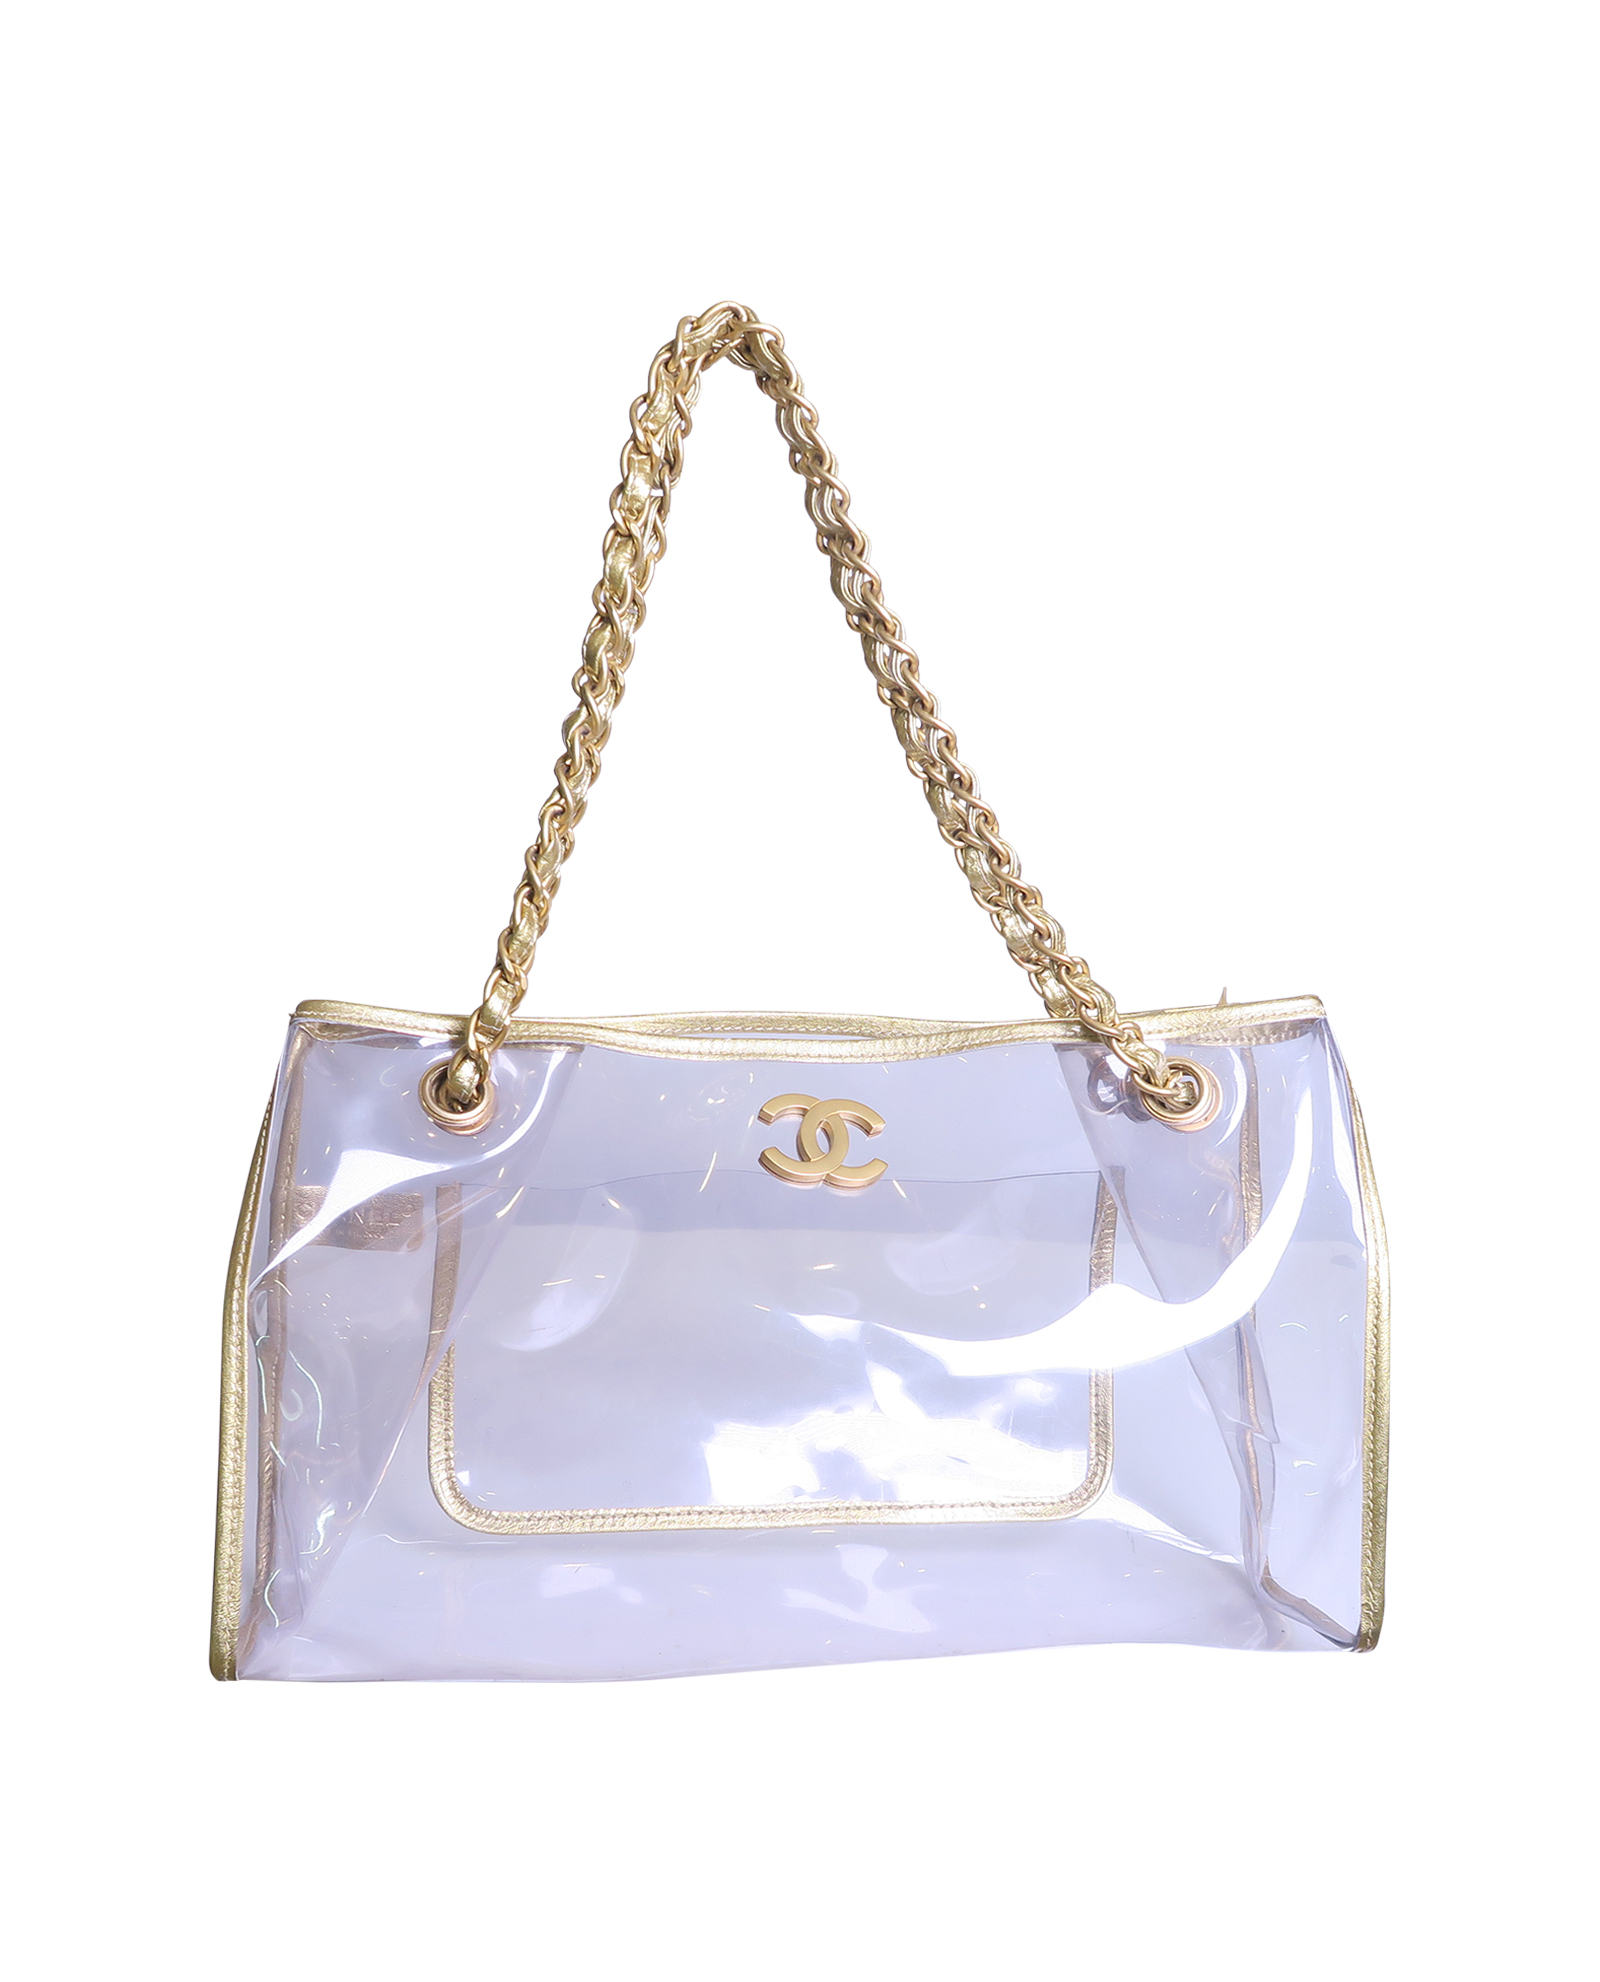 Chanel Clear Bag -  UK